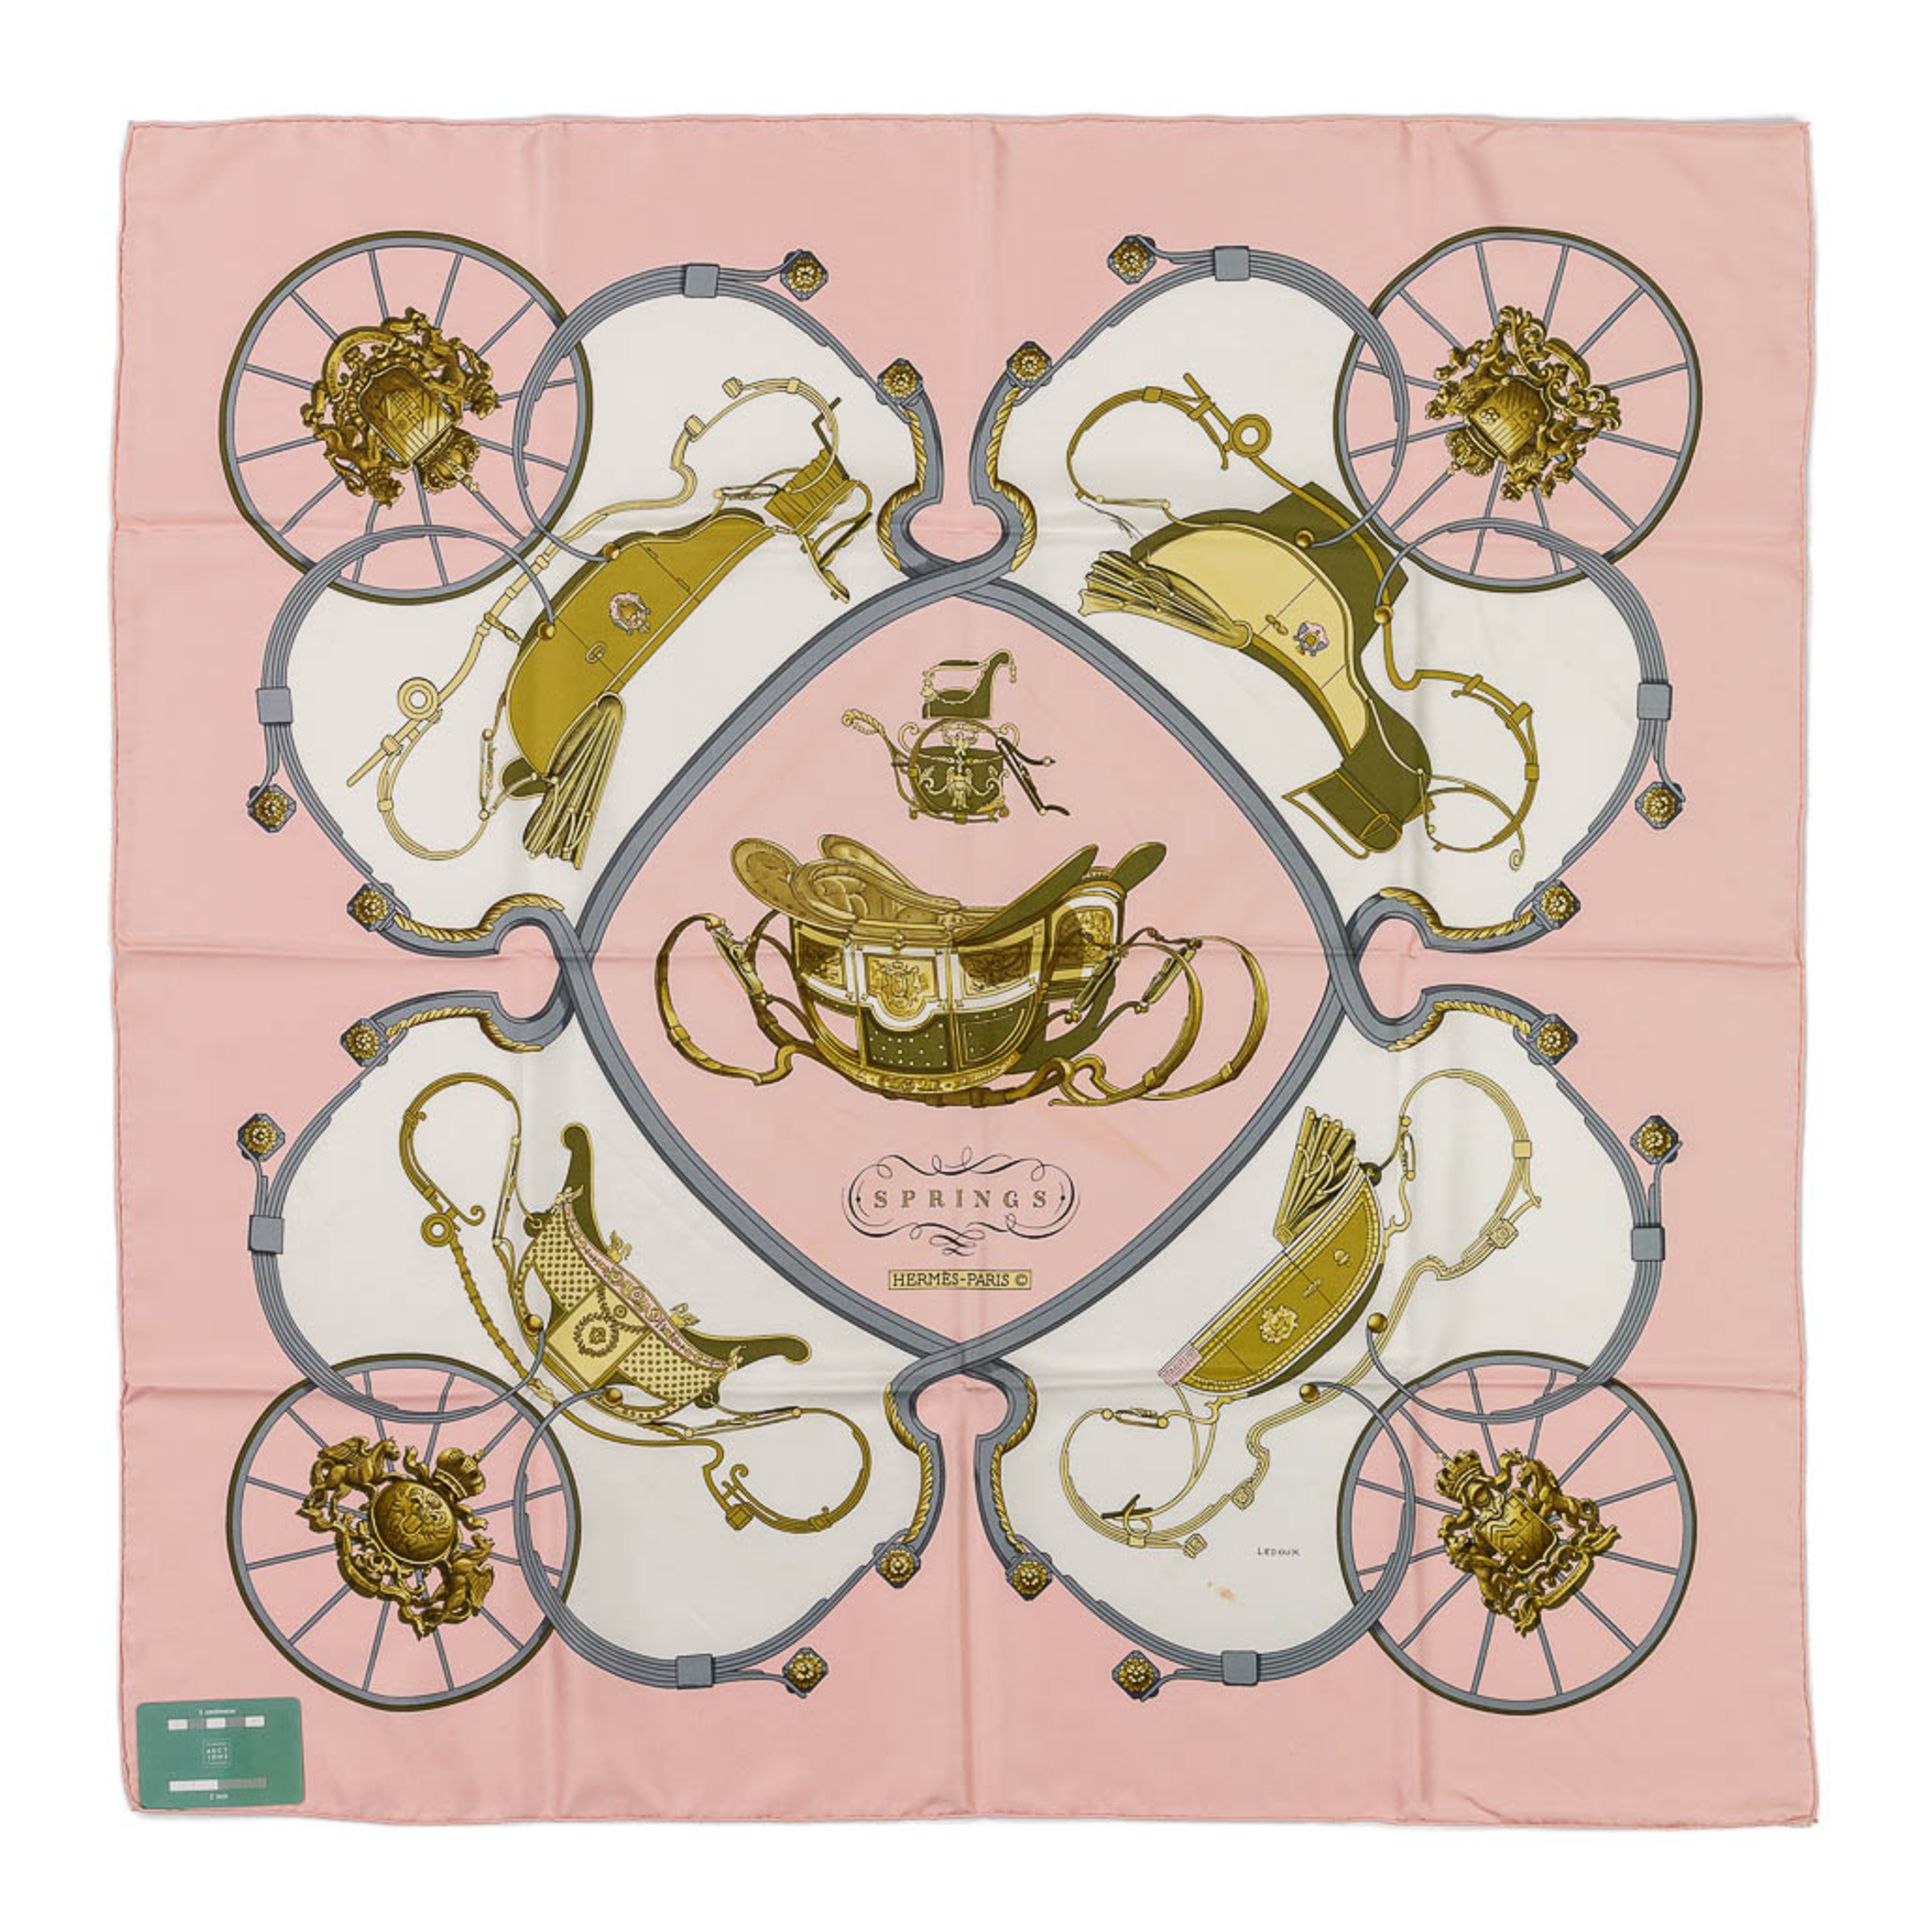 Hermès Paris, a silk scarf, 'Spring'. (L: 88 x W: 88 cm) - Bild 2 aus 17